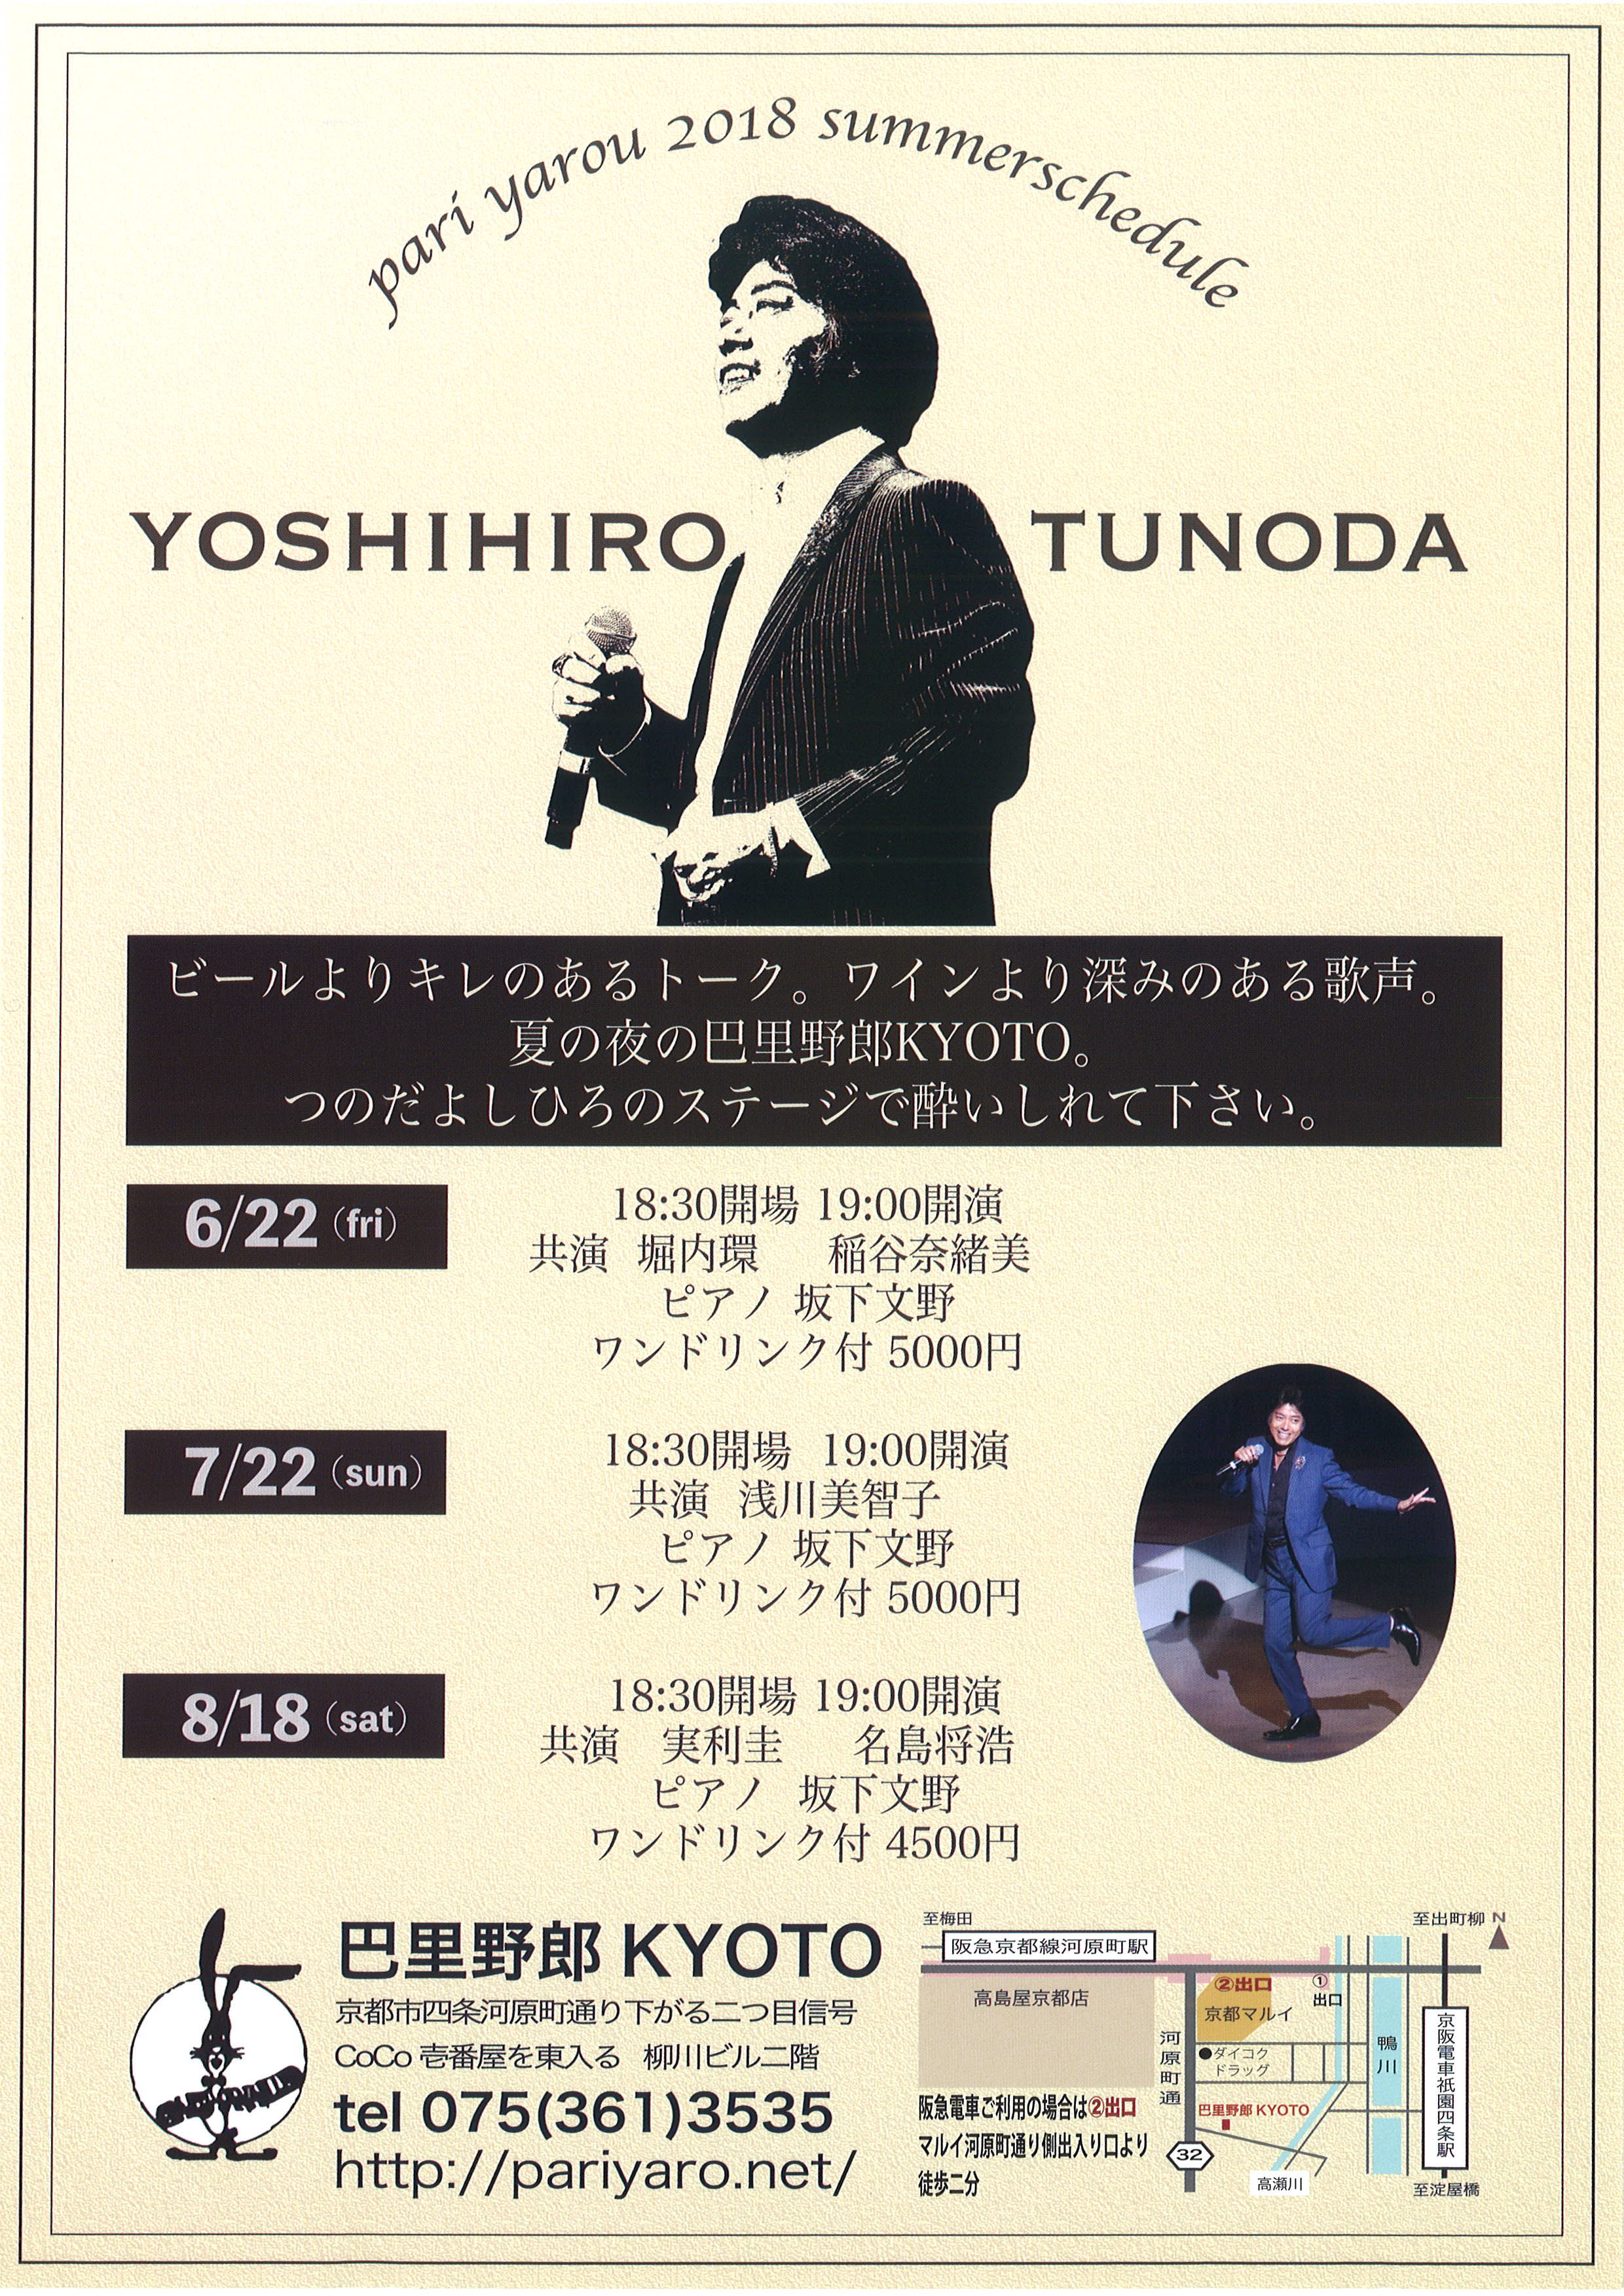 YOSHIHIRO TSUNODA pariyarou 2018.jpg